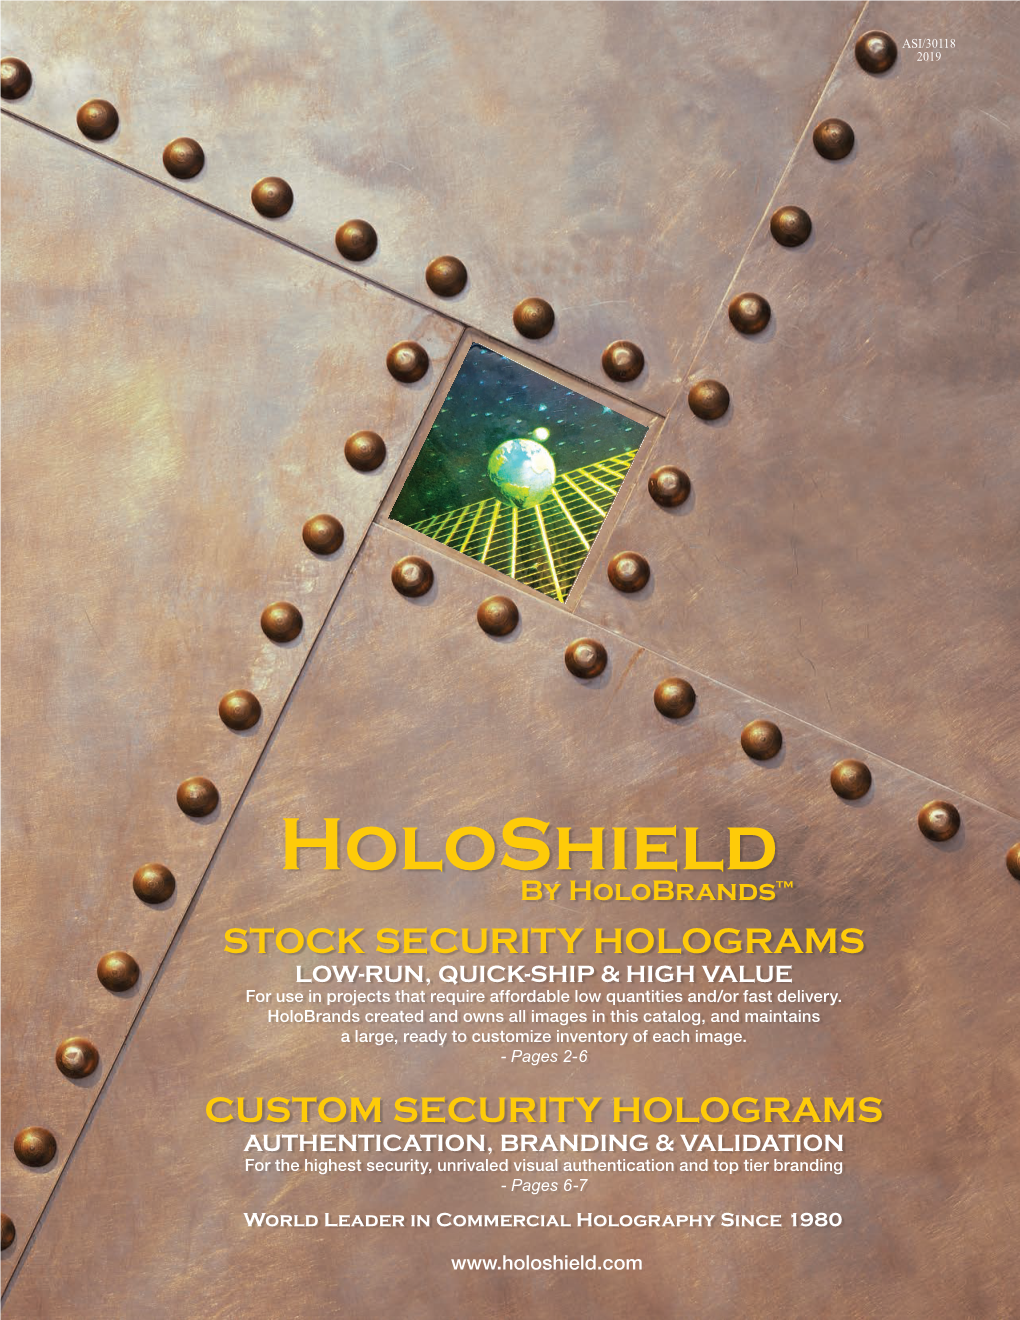 Holoshield TM SECURITY HOLOGRAMS